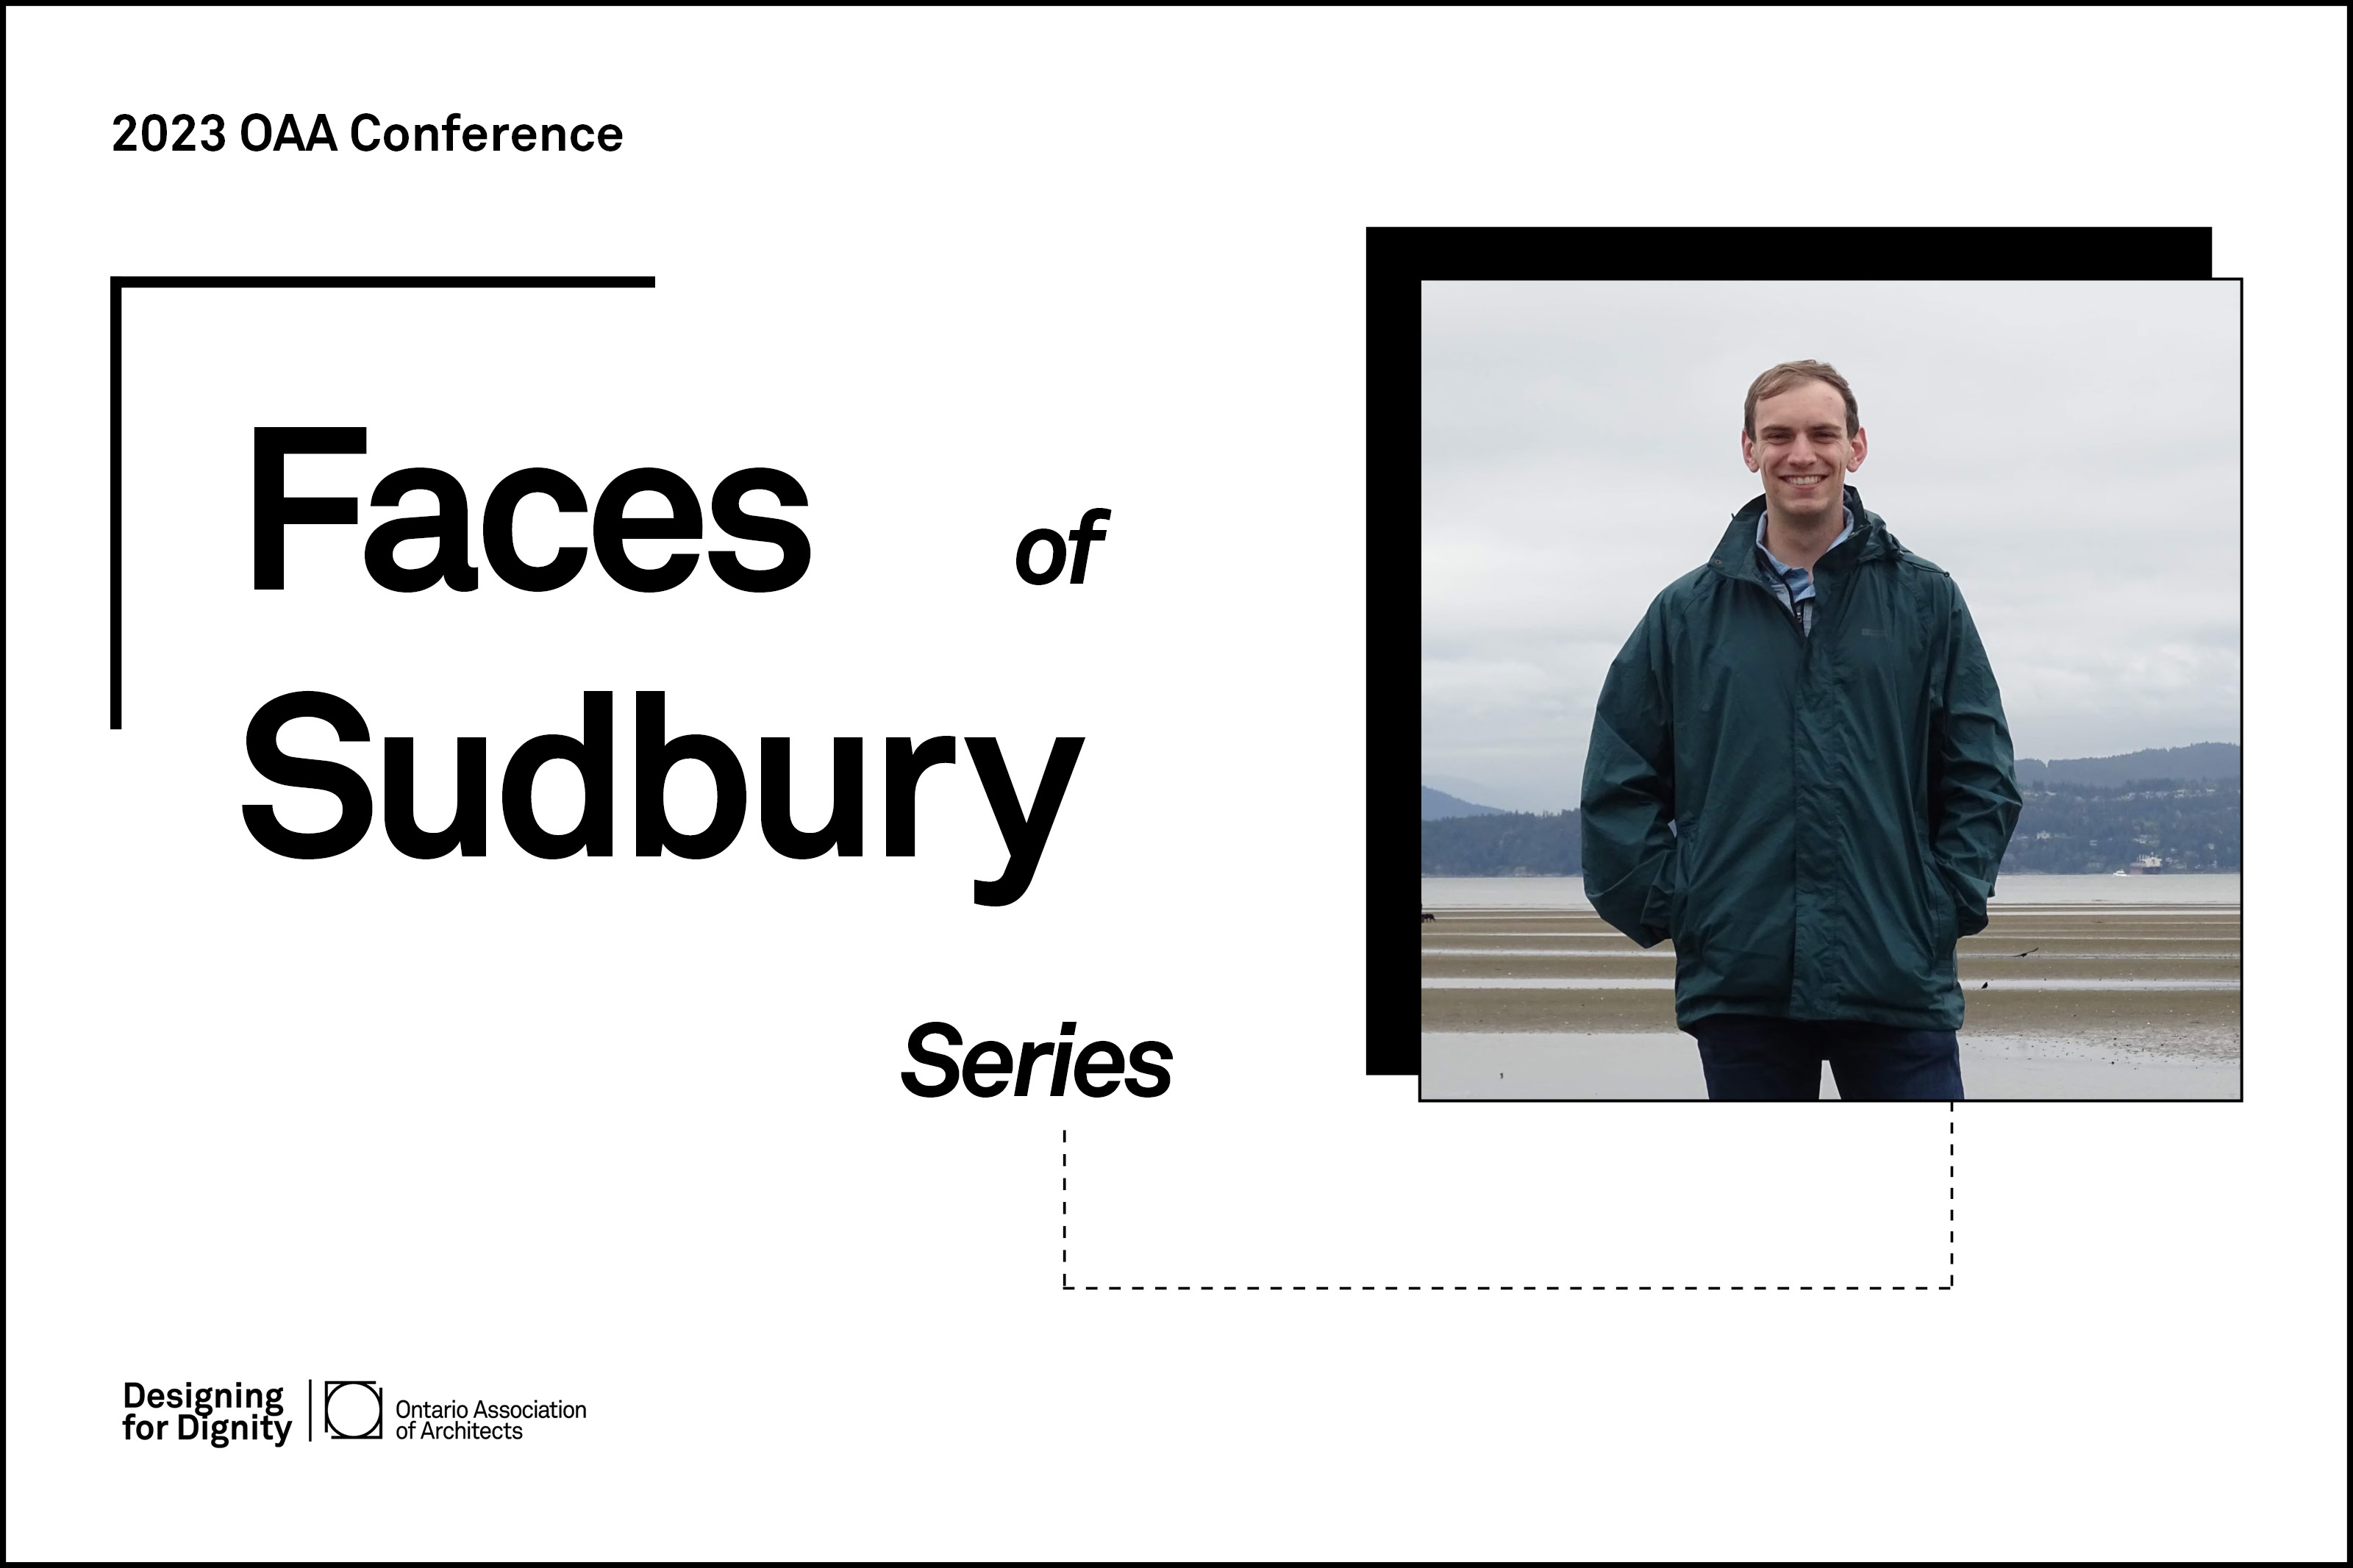 blOAAG 2023 OAA Conference 'Faces of Sudbury' Series - Chris Johnson